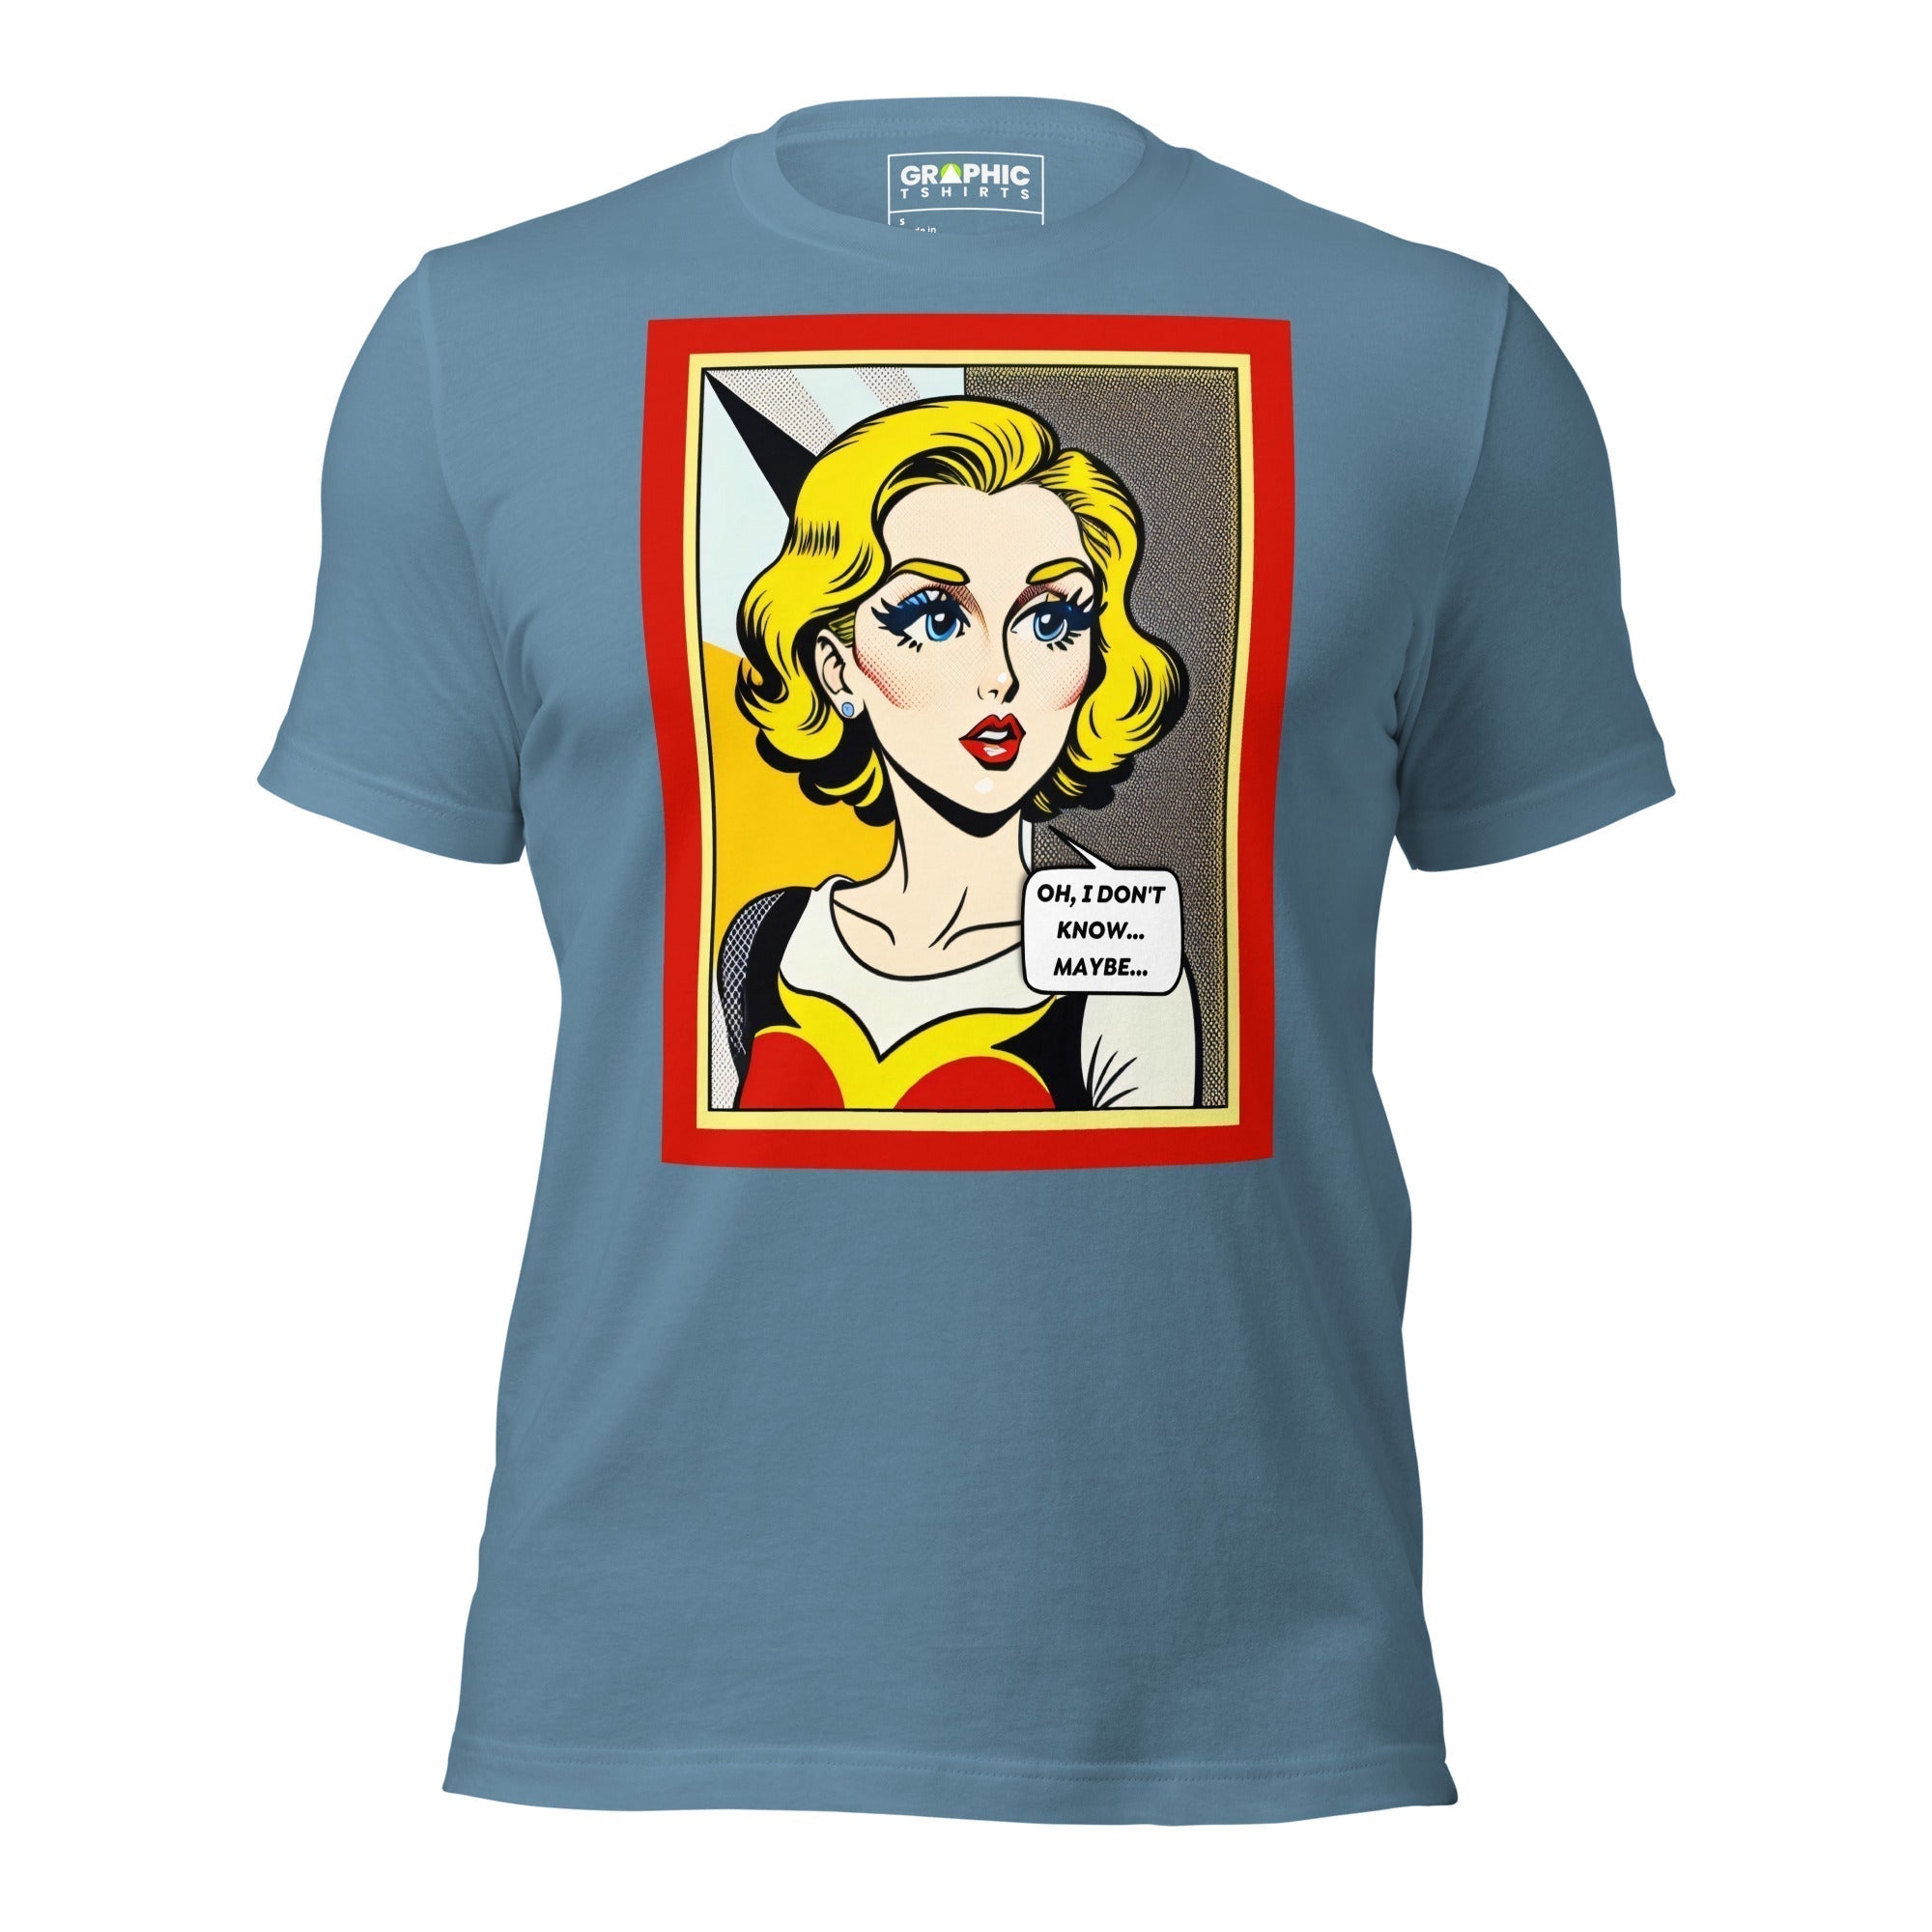 Unisex Crew Neck T-Shirt - Vintage American Comic Series v.40 - GRAPHIC T-SHIRTS